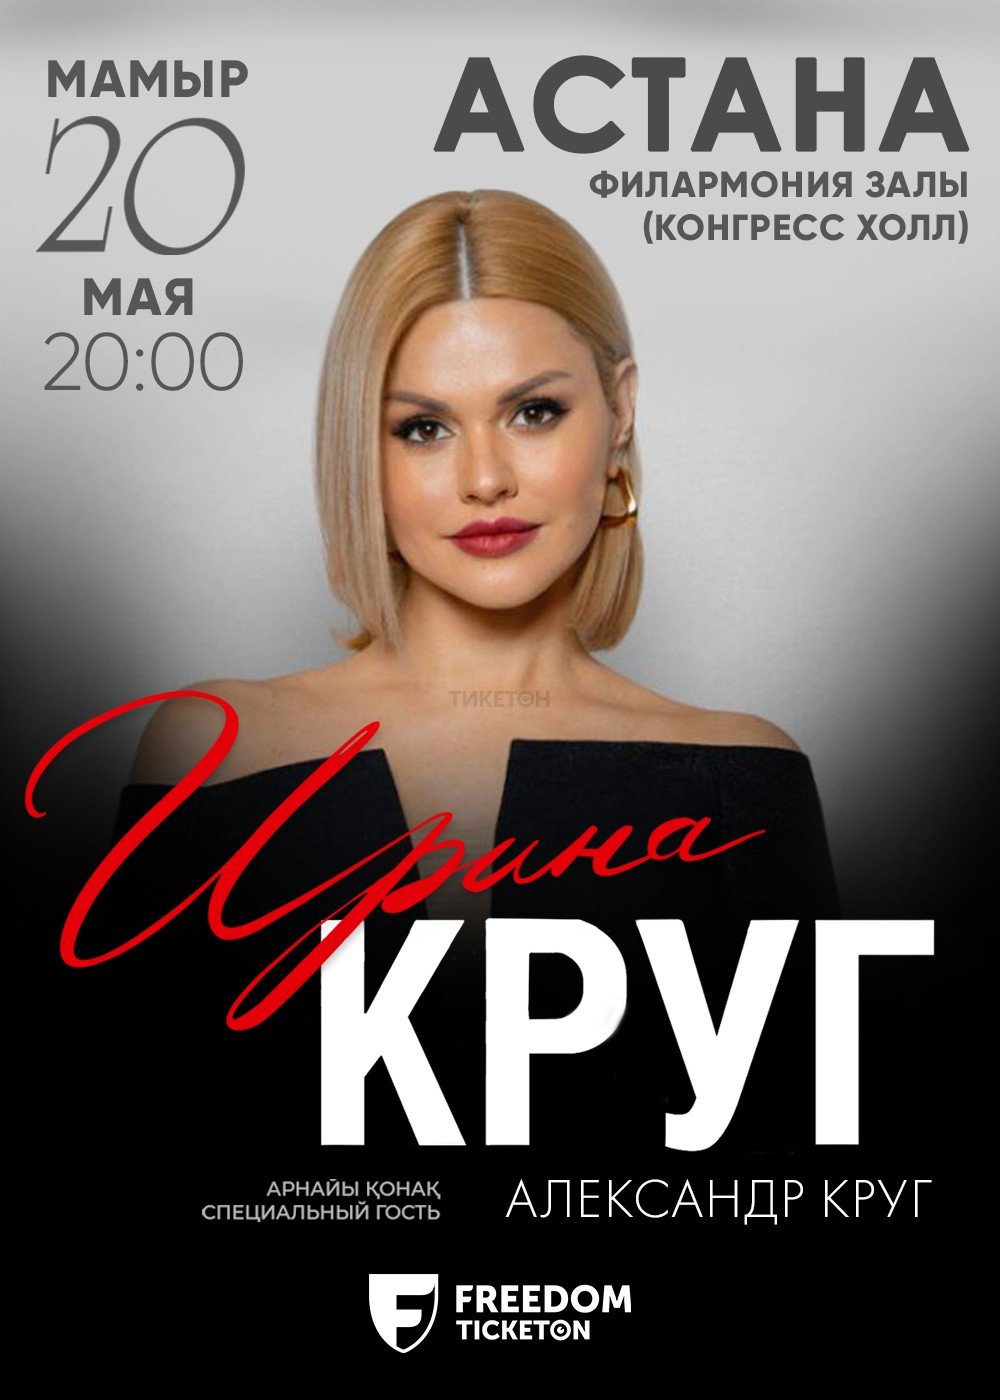 Irina Krug's concert in Astana